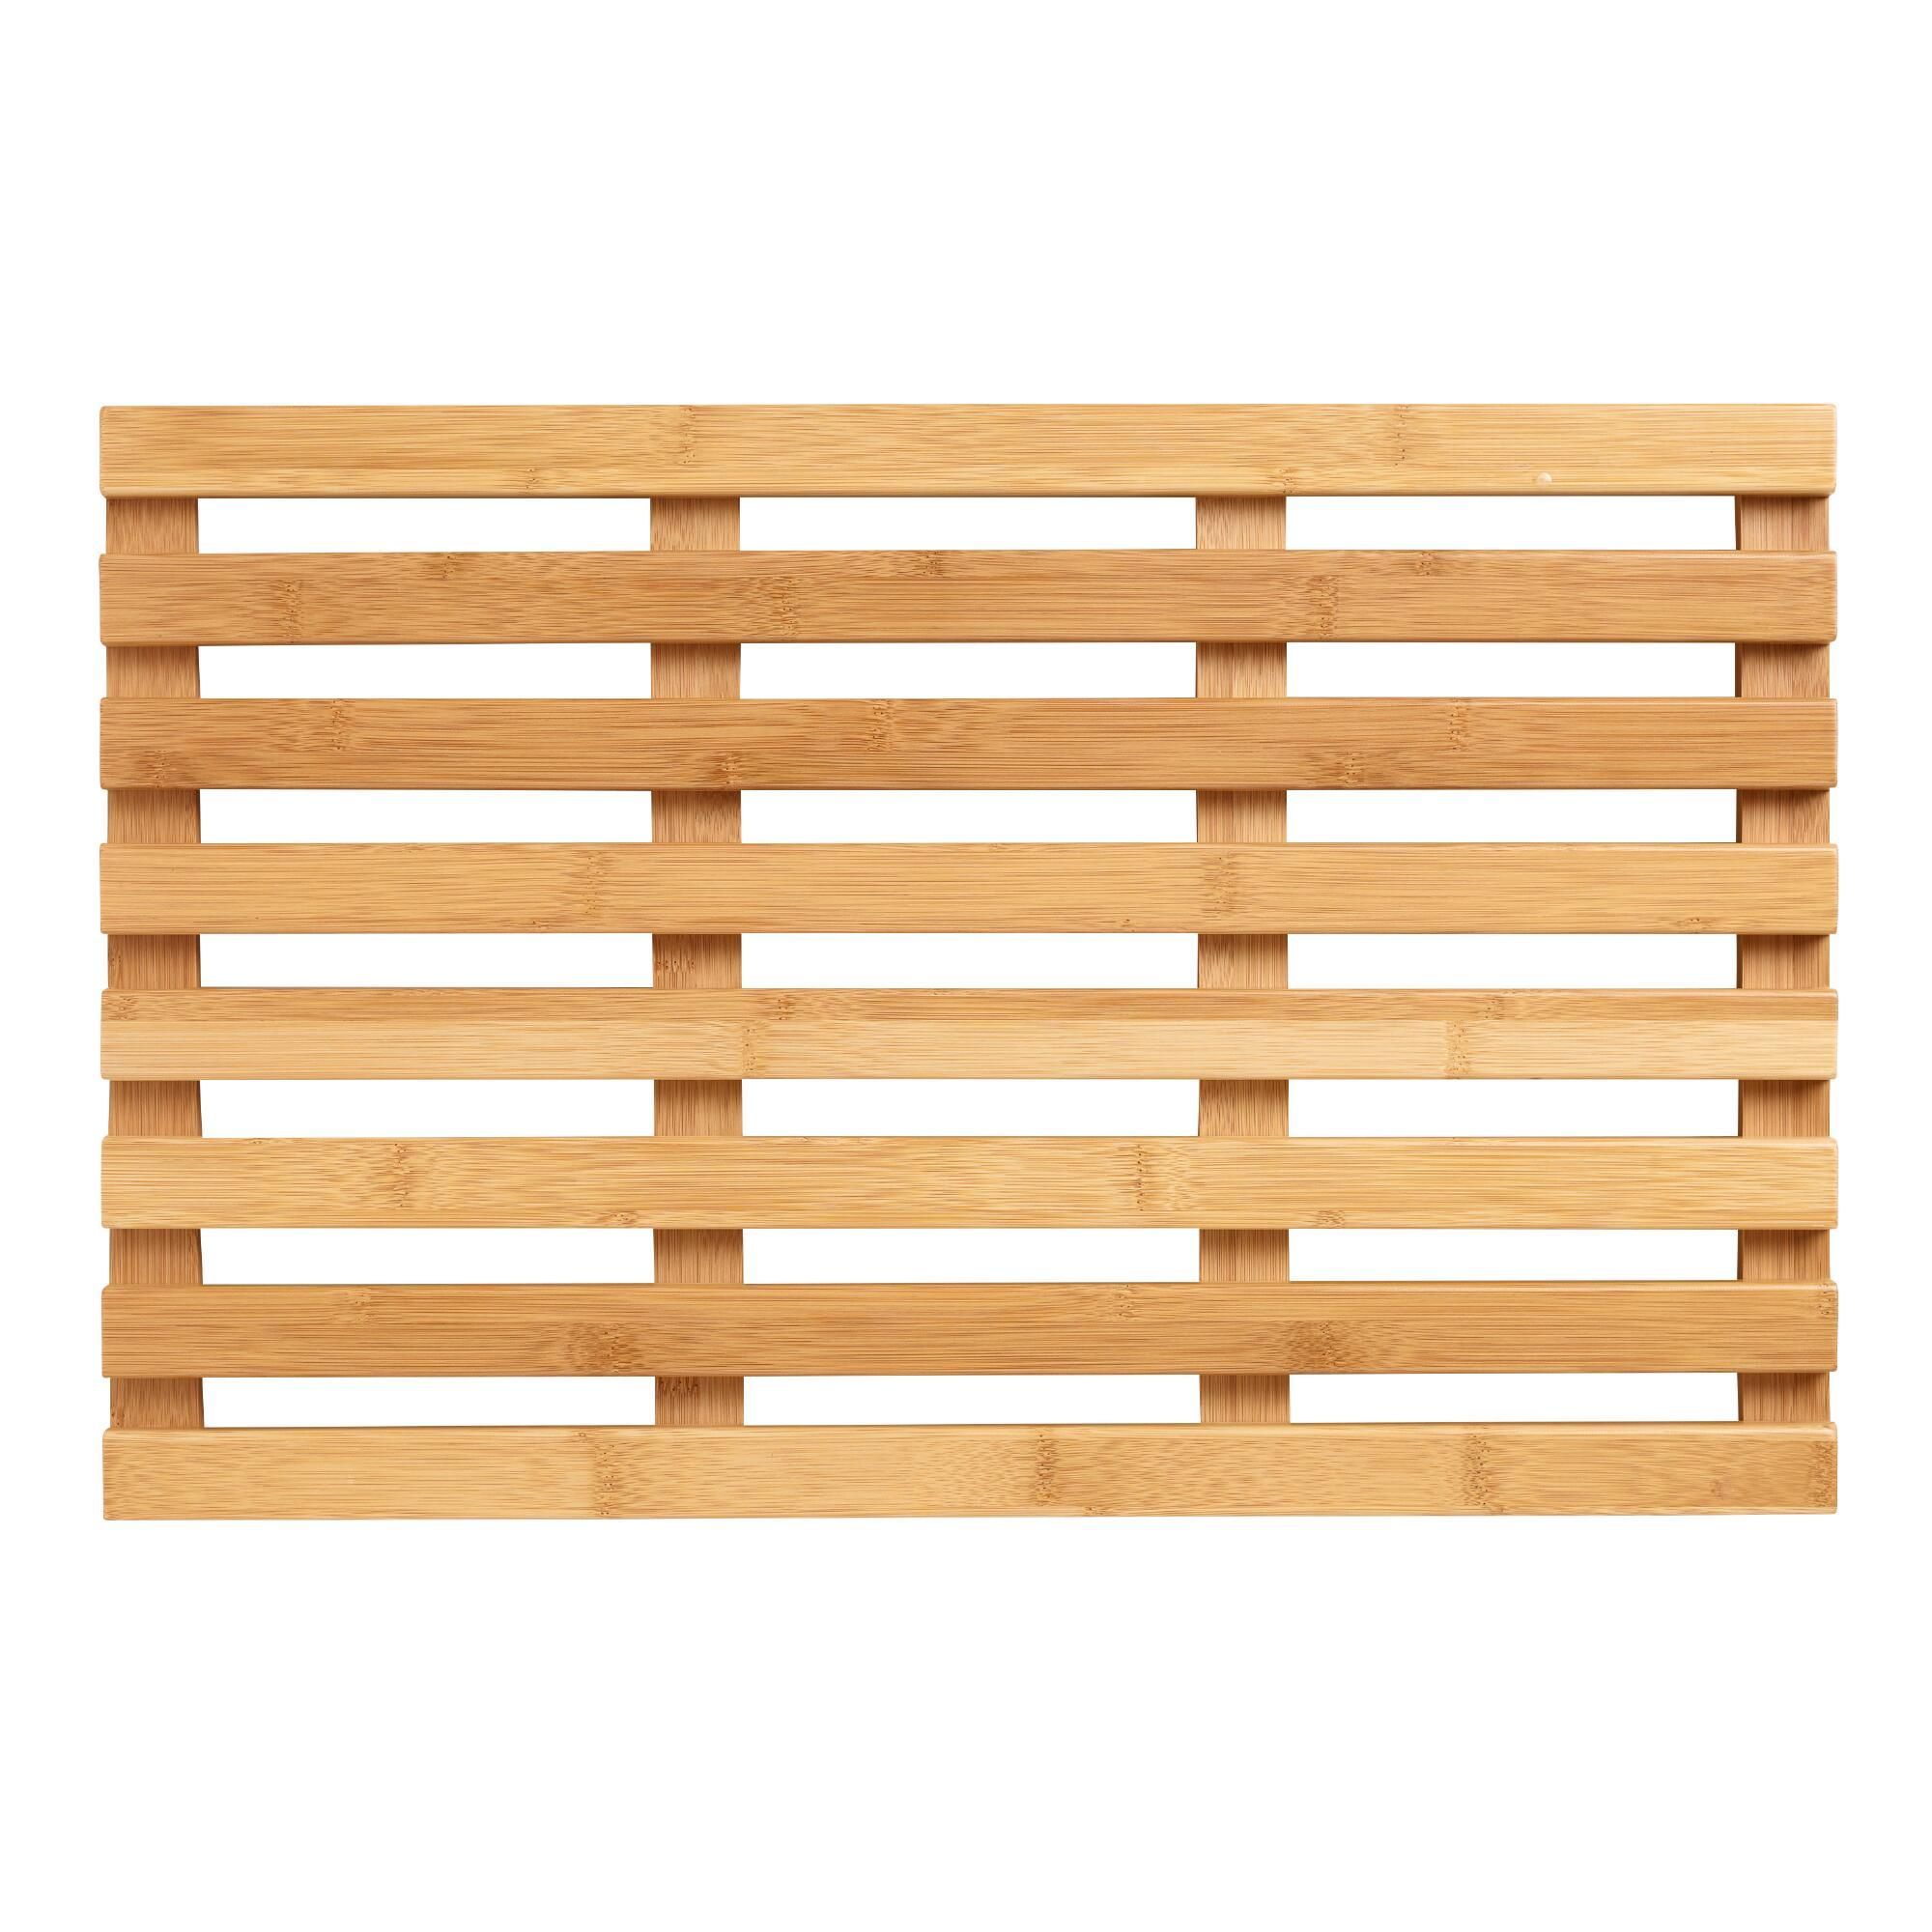 Are wooden bath mats a good idea? – Natural Step